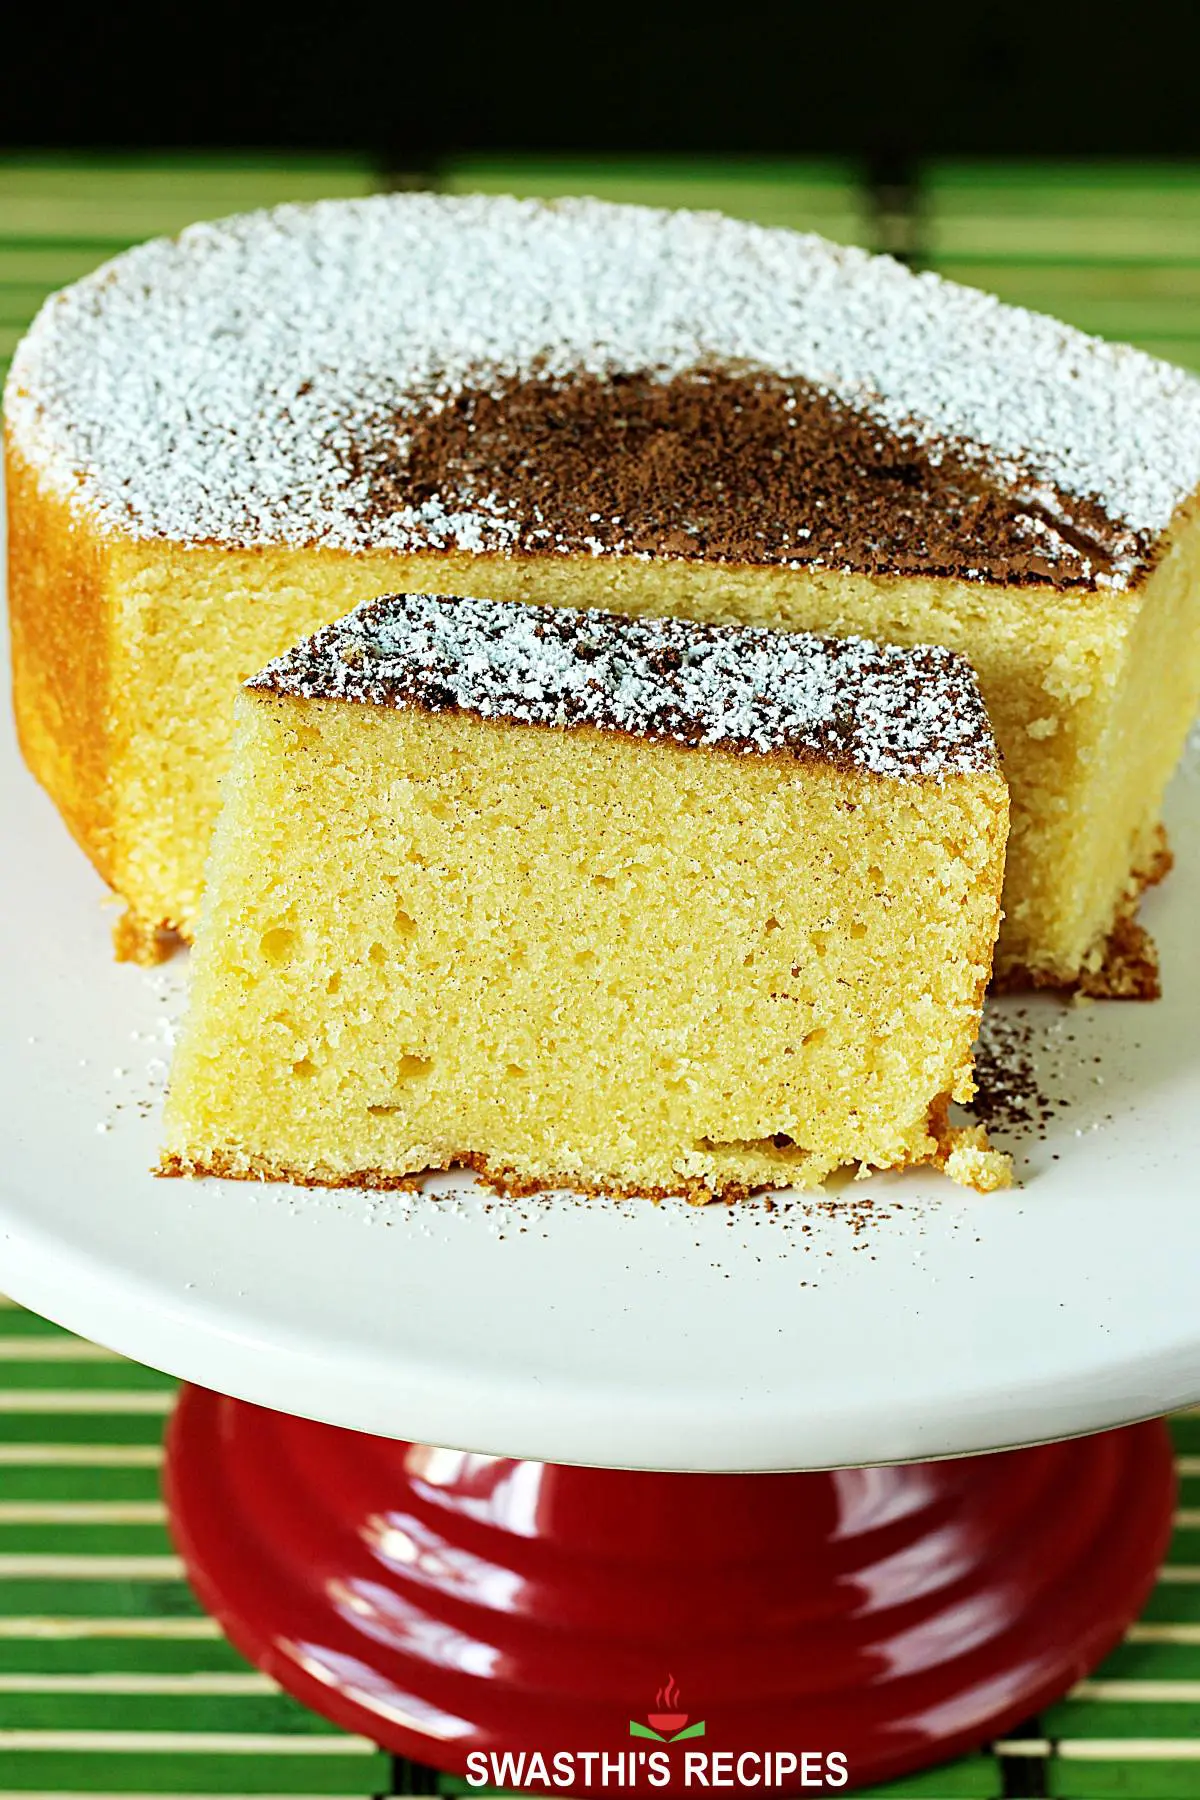 AAHA bhavan 4 minute Chocolate Sponge Cake Microwave recipe